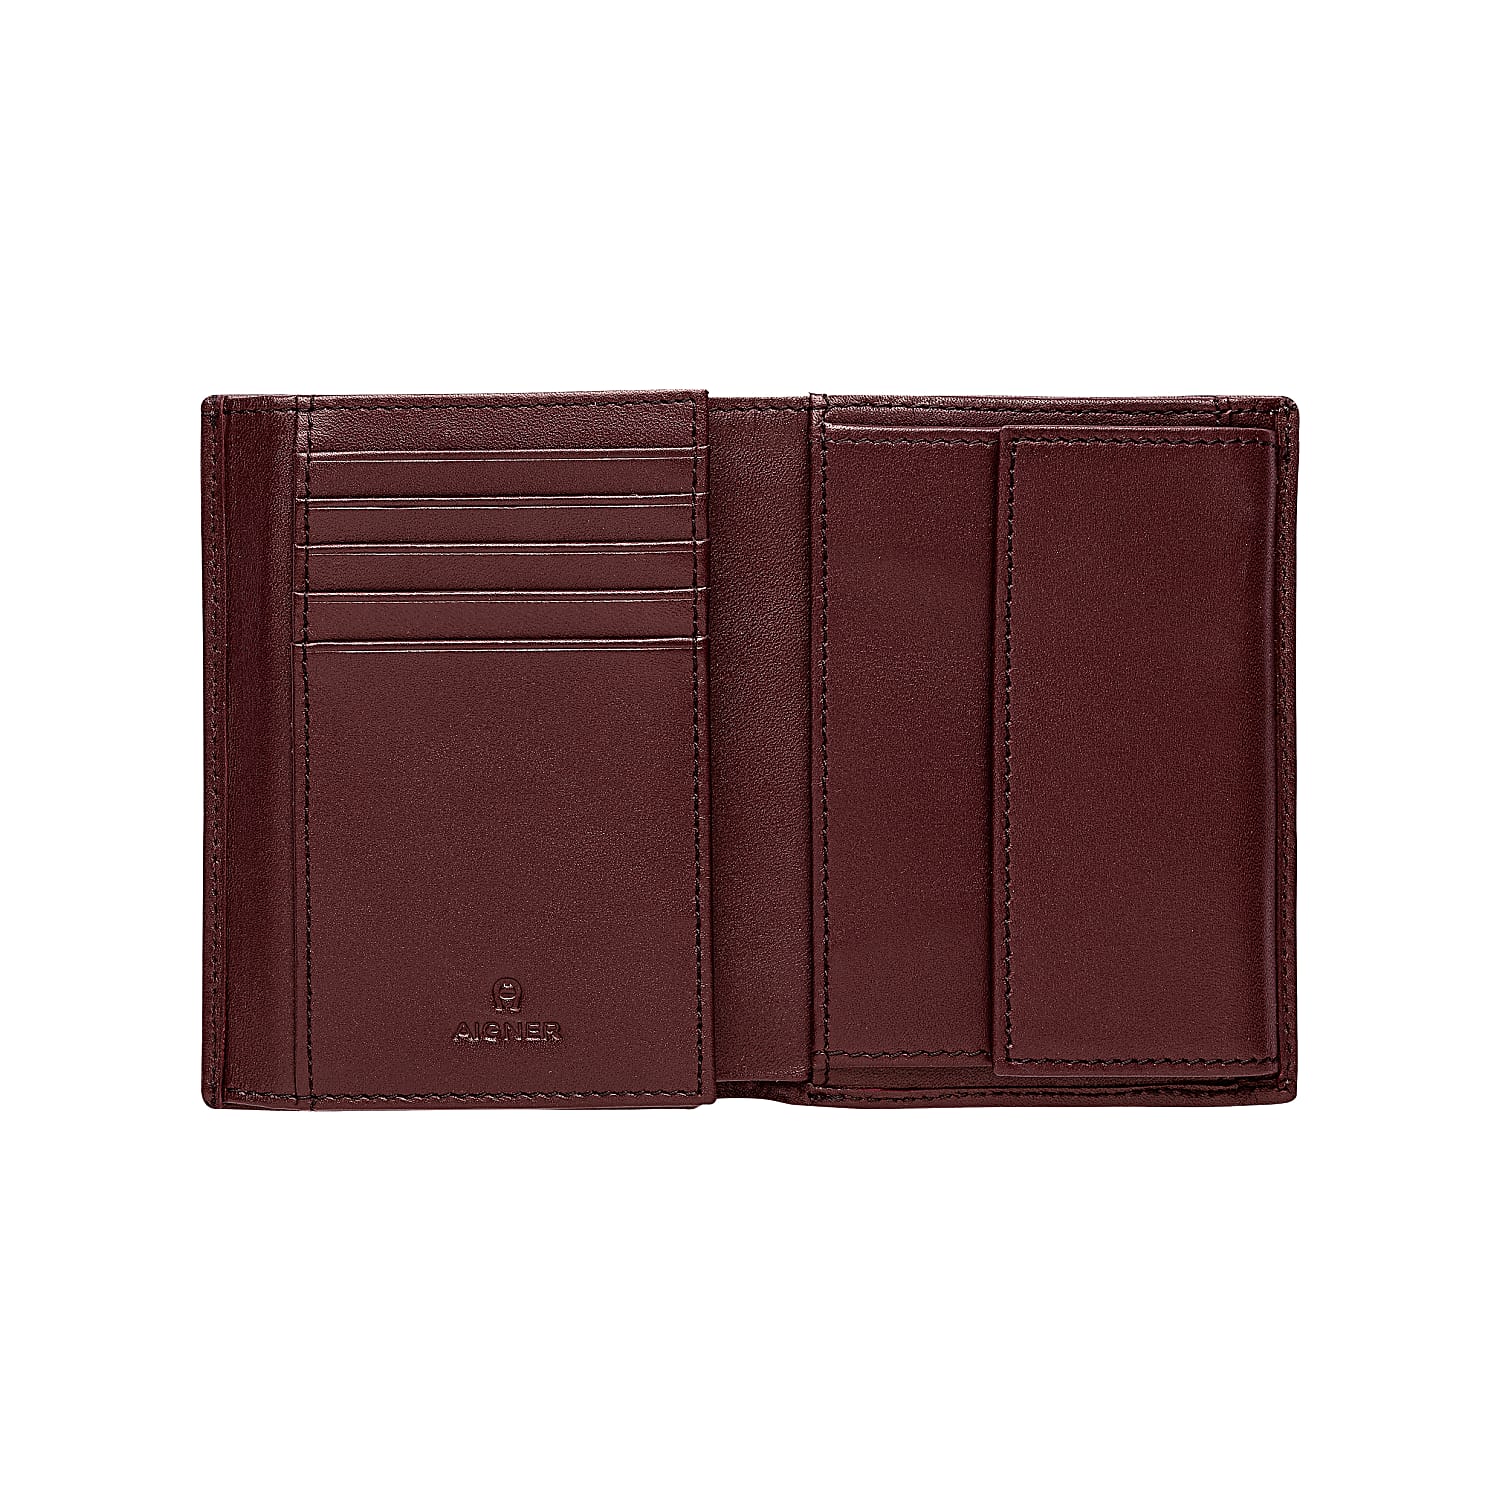 Basics combination wallet